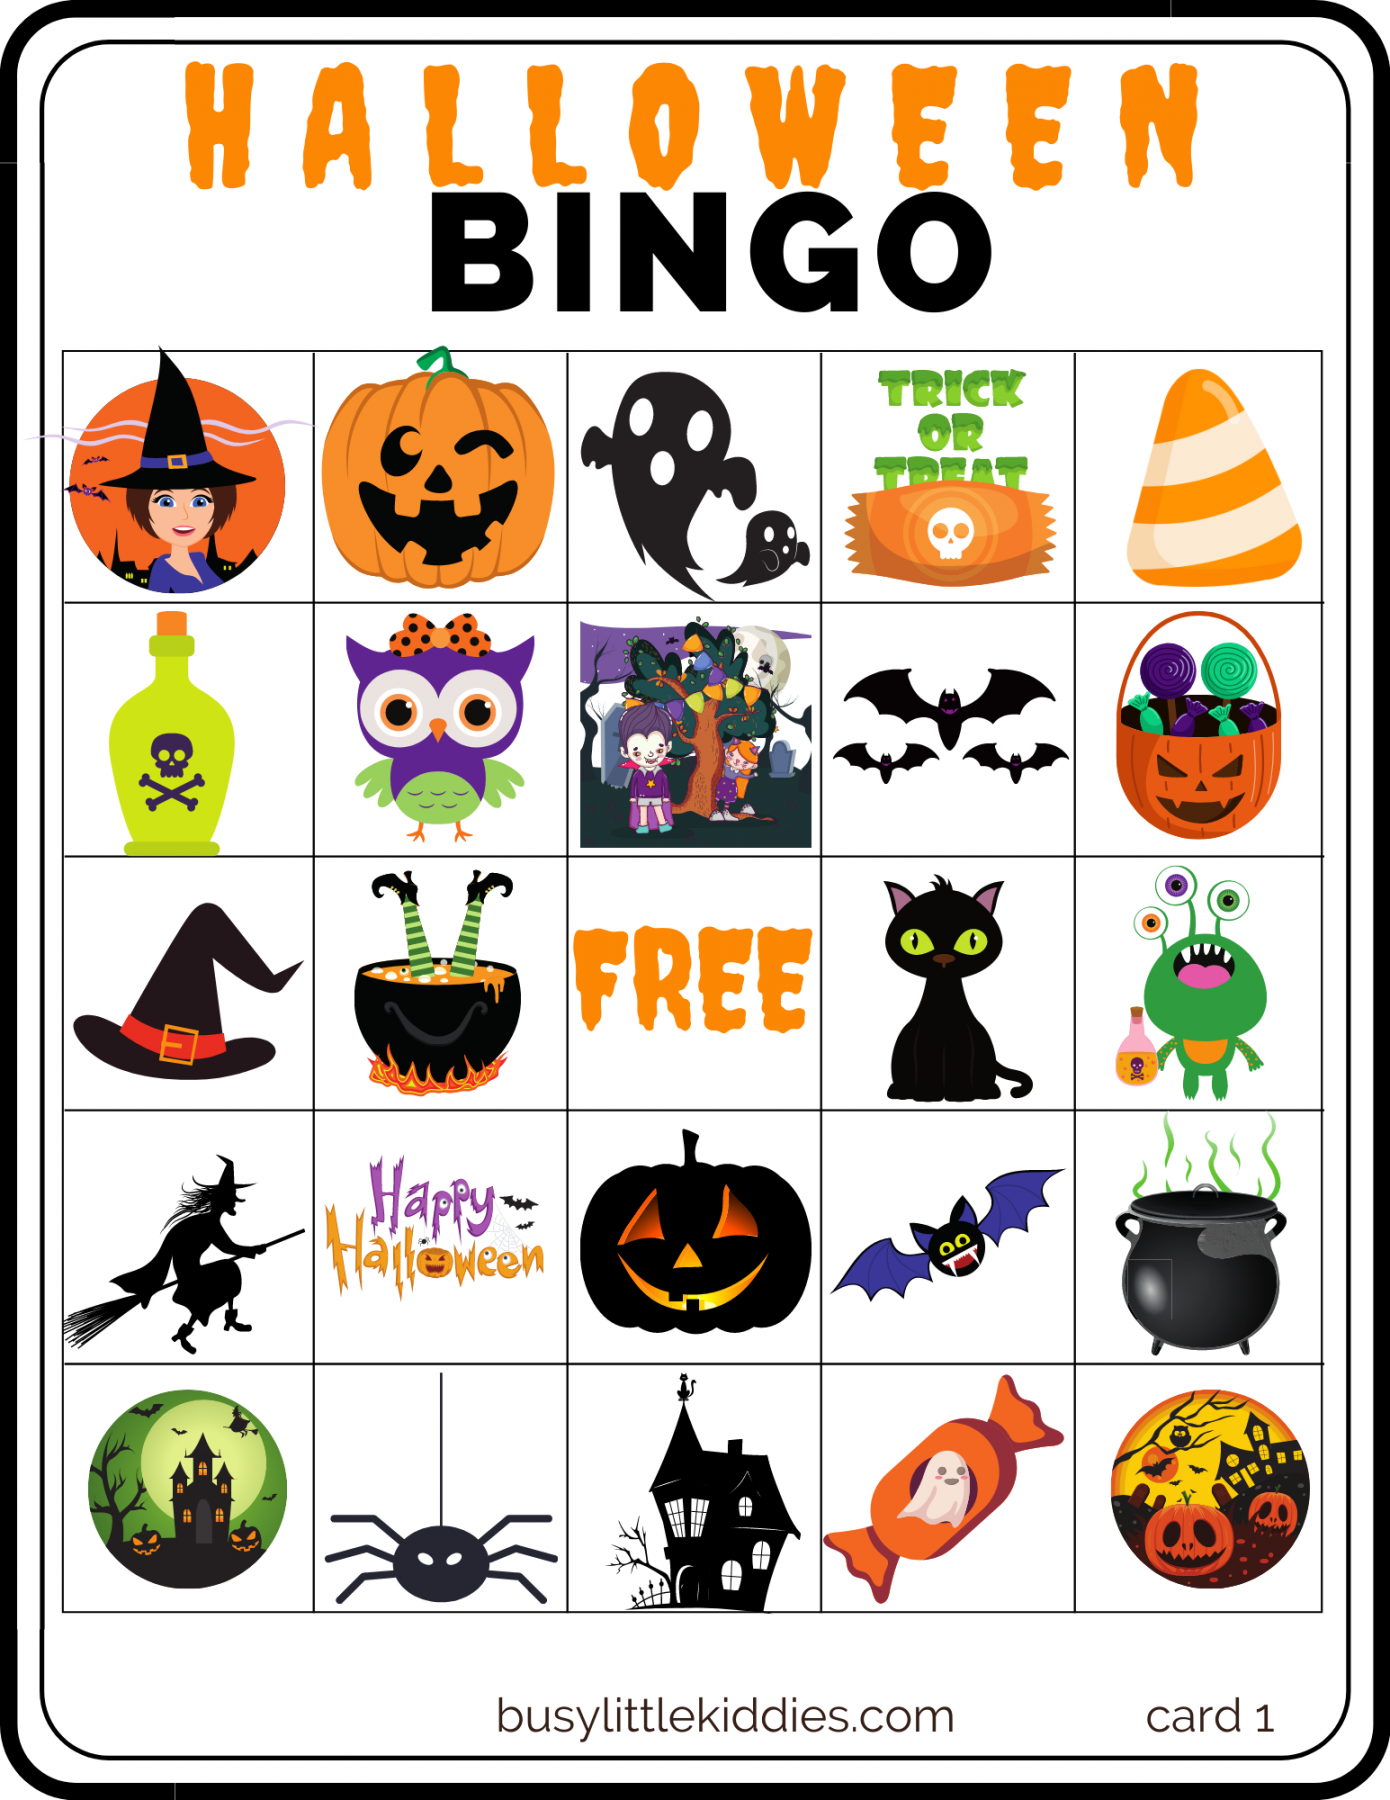 Free Halloween Bingo Printables - Printable - Halloween Bingo Free Printable with Pictures  players - Busy